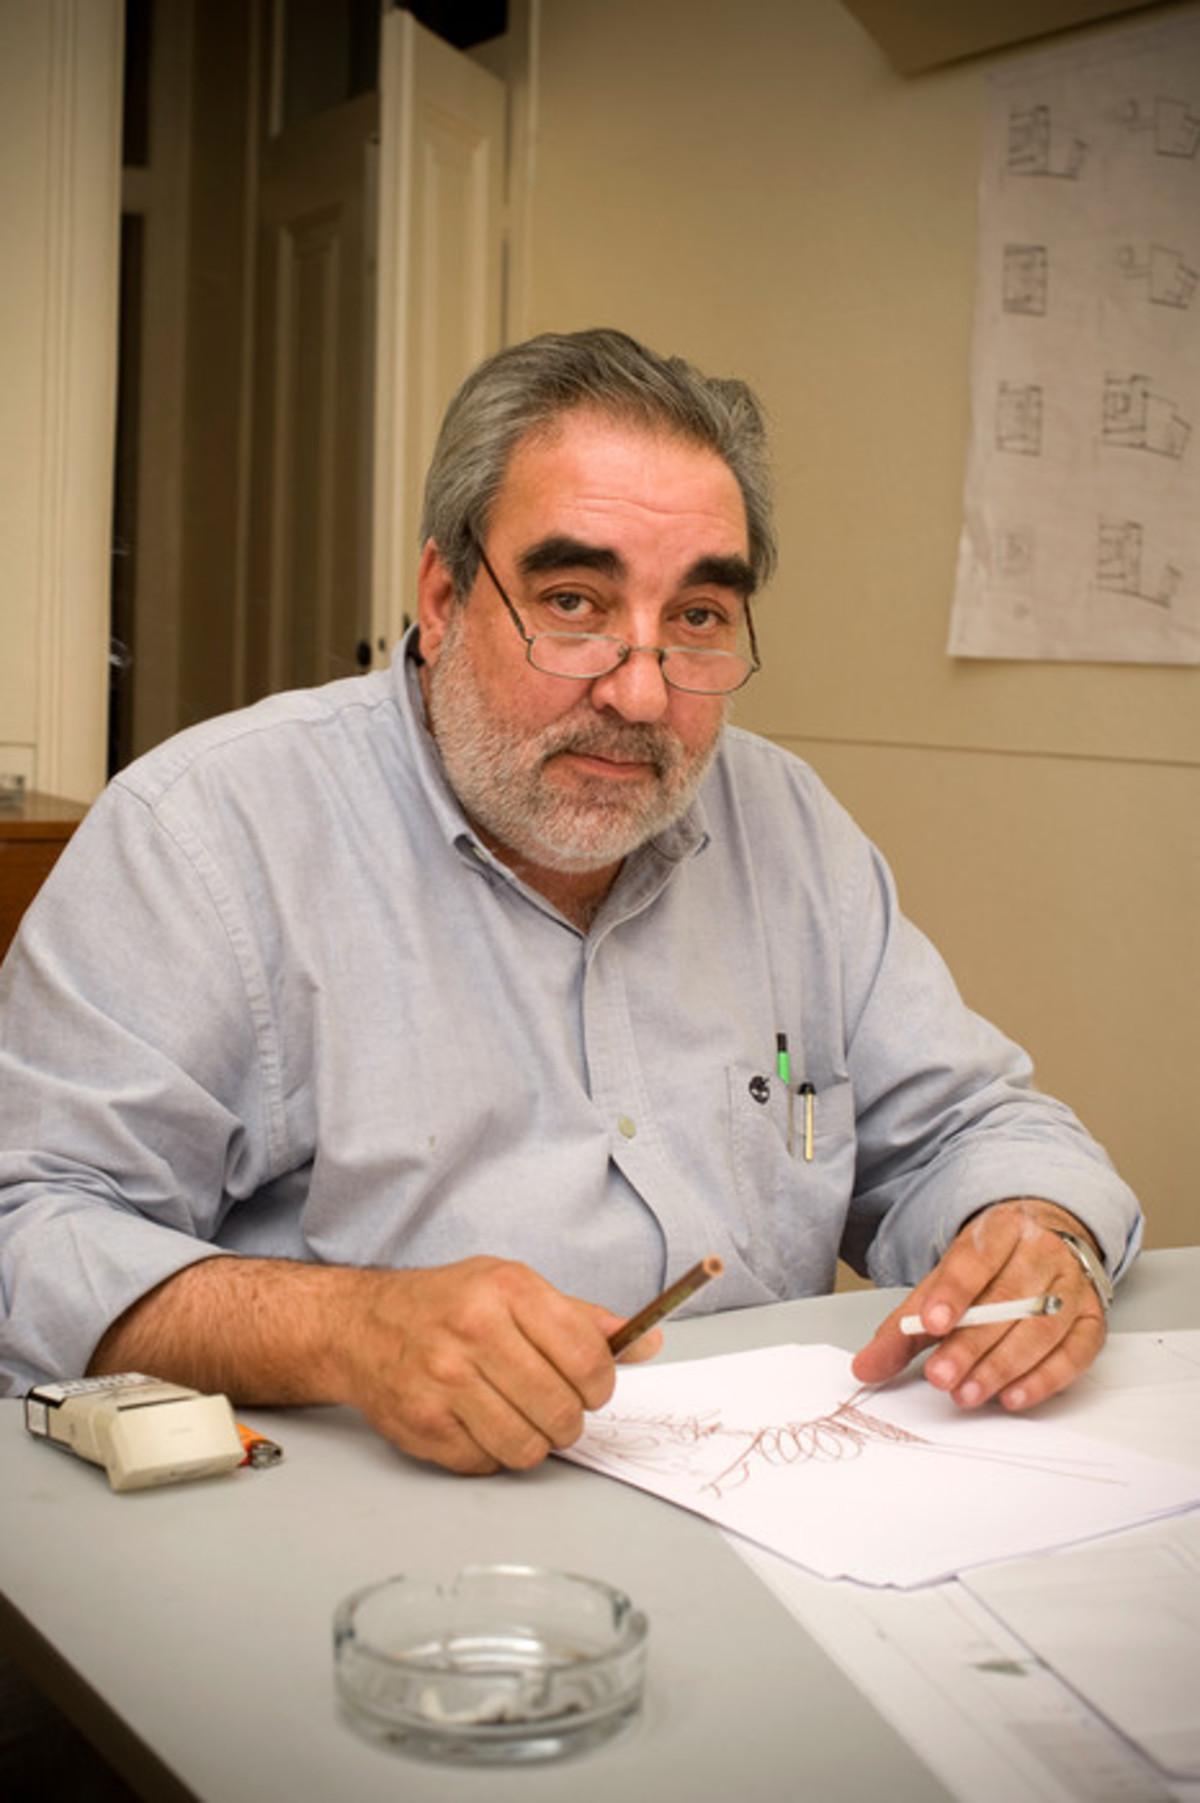 Eduardo Souto de Moura - laureat Architektonicznej Nagrody Pritzker’a w roku 2011